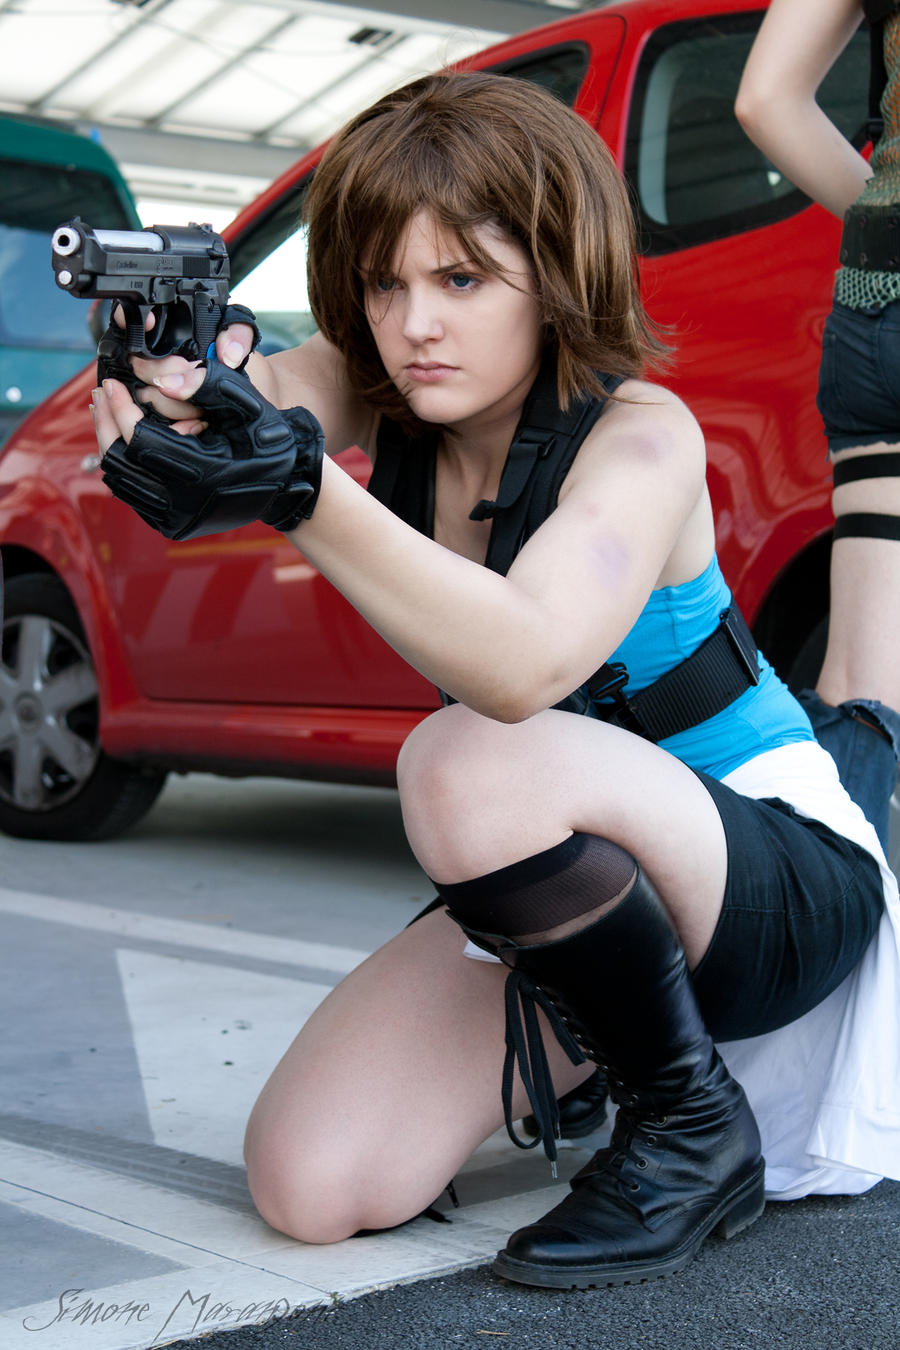 Jill Valentine - Resident Evil: Apocalypse by RachelO394 on DeviantArt